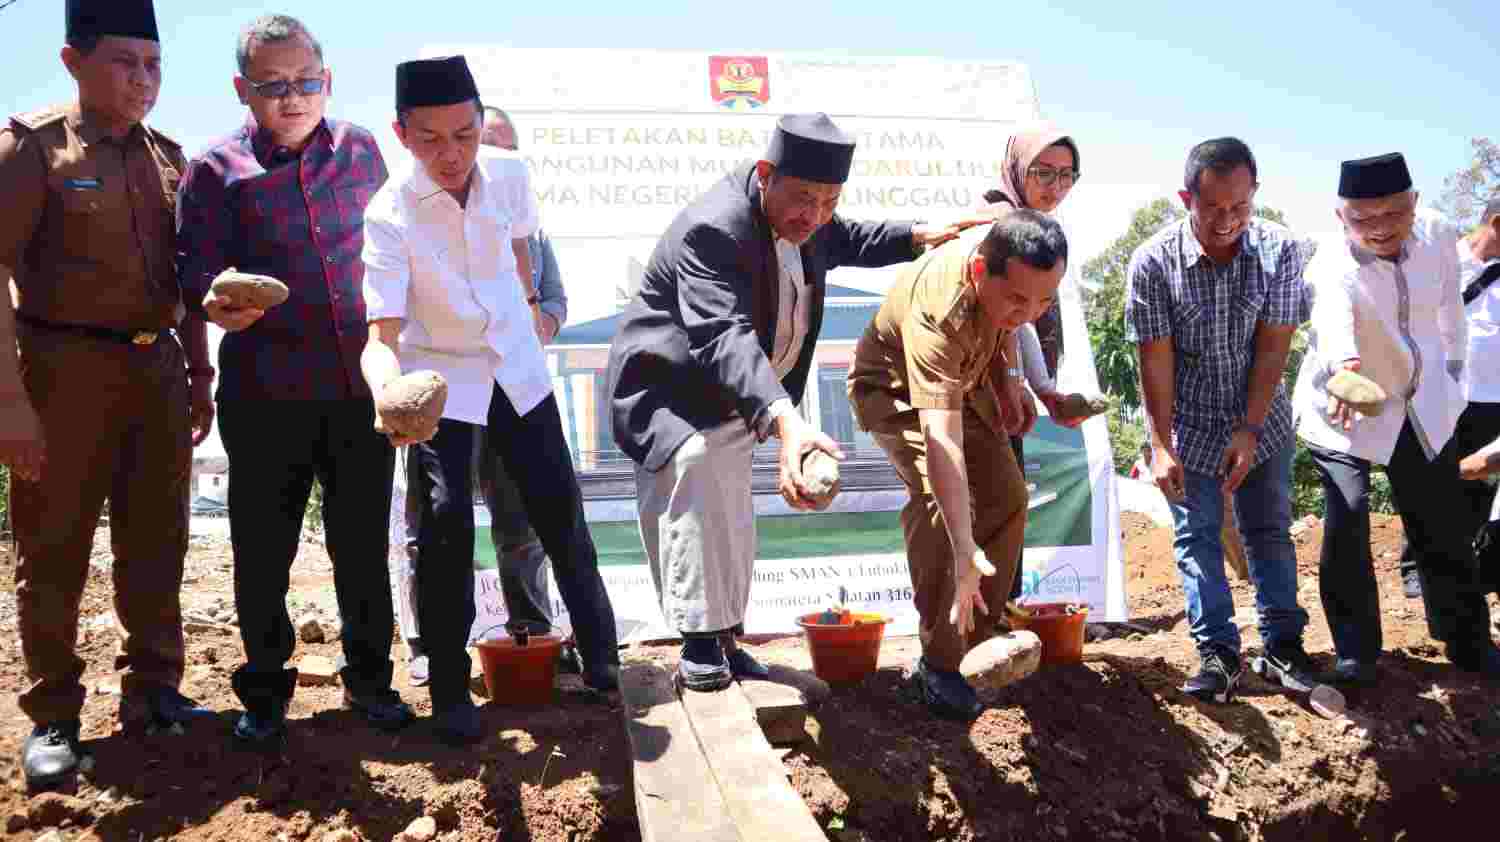 Wako Lakukan Peletakan Batu Pertama Pembangunan Musholla Darul Ulum SMAN 1 Lubuklinggau